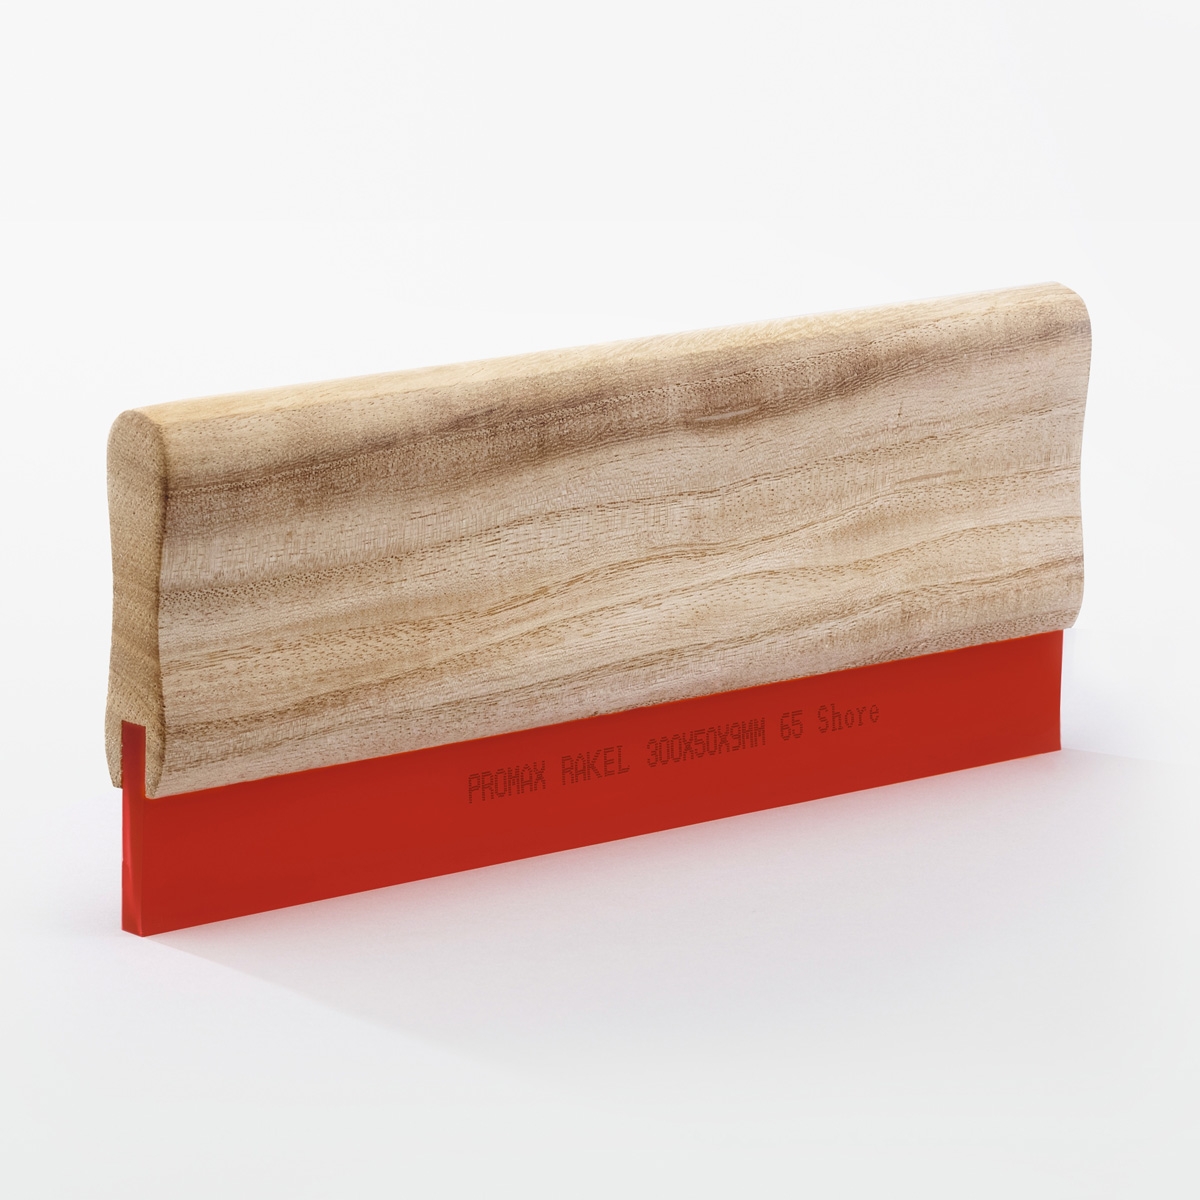 25cm Holz-Rakel in 65 70 75 Shore Siebdruckrakel Textildruck Holzrakel Siebdruck 